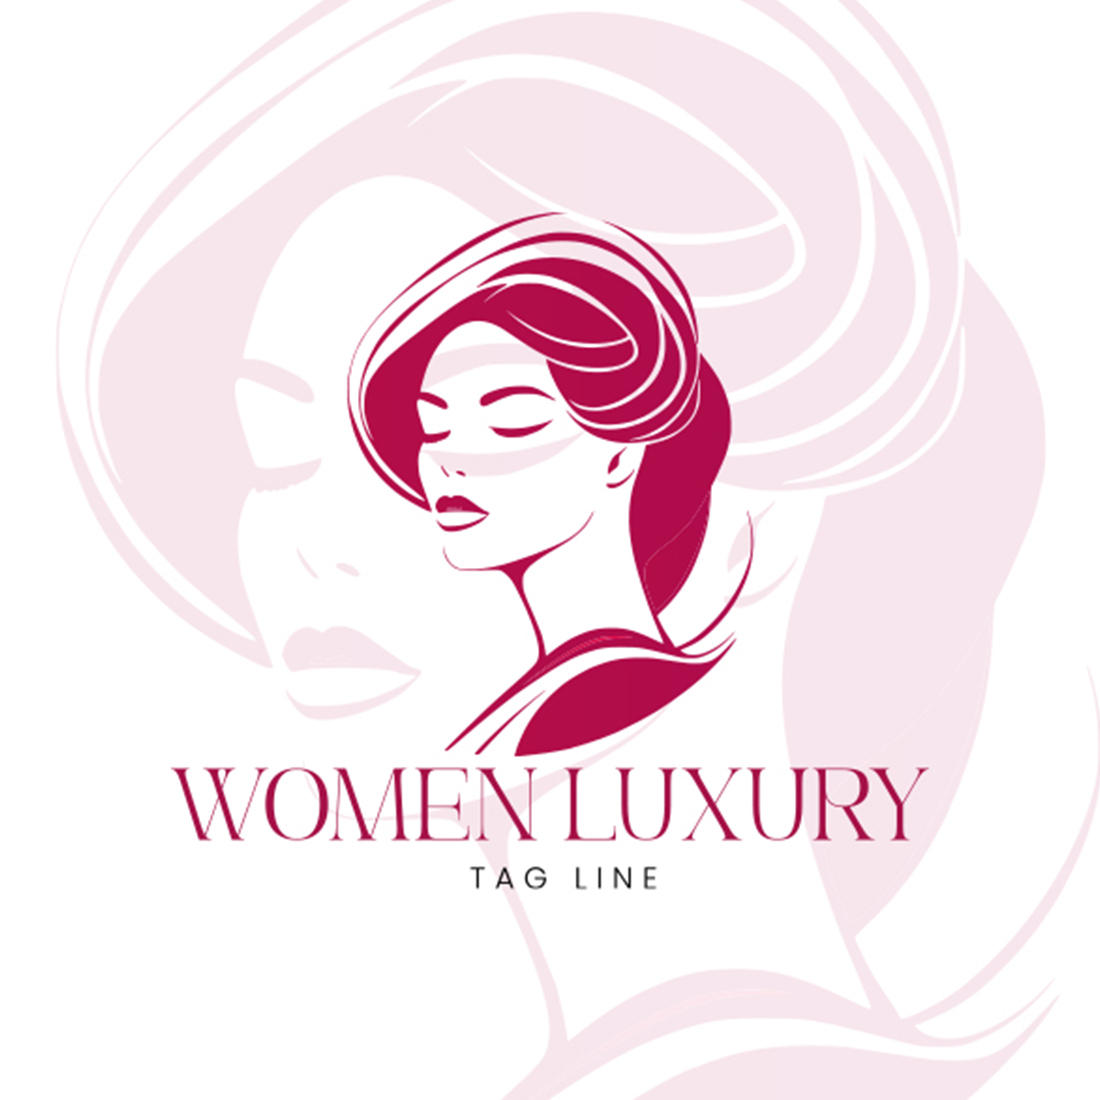 Women beauty logo preview image.